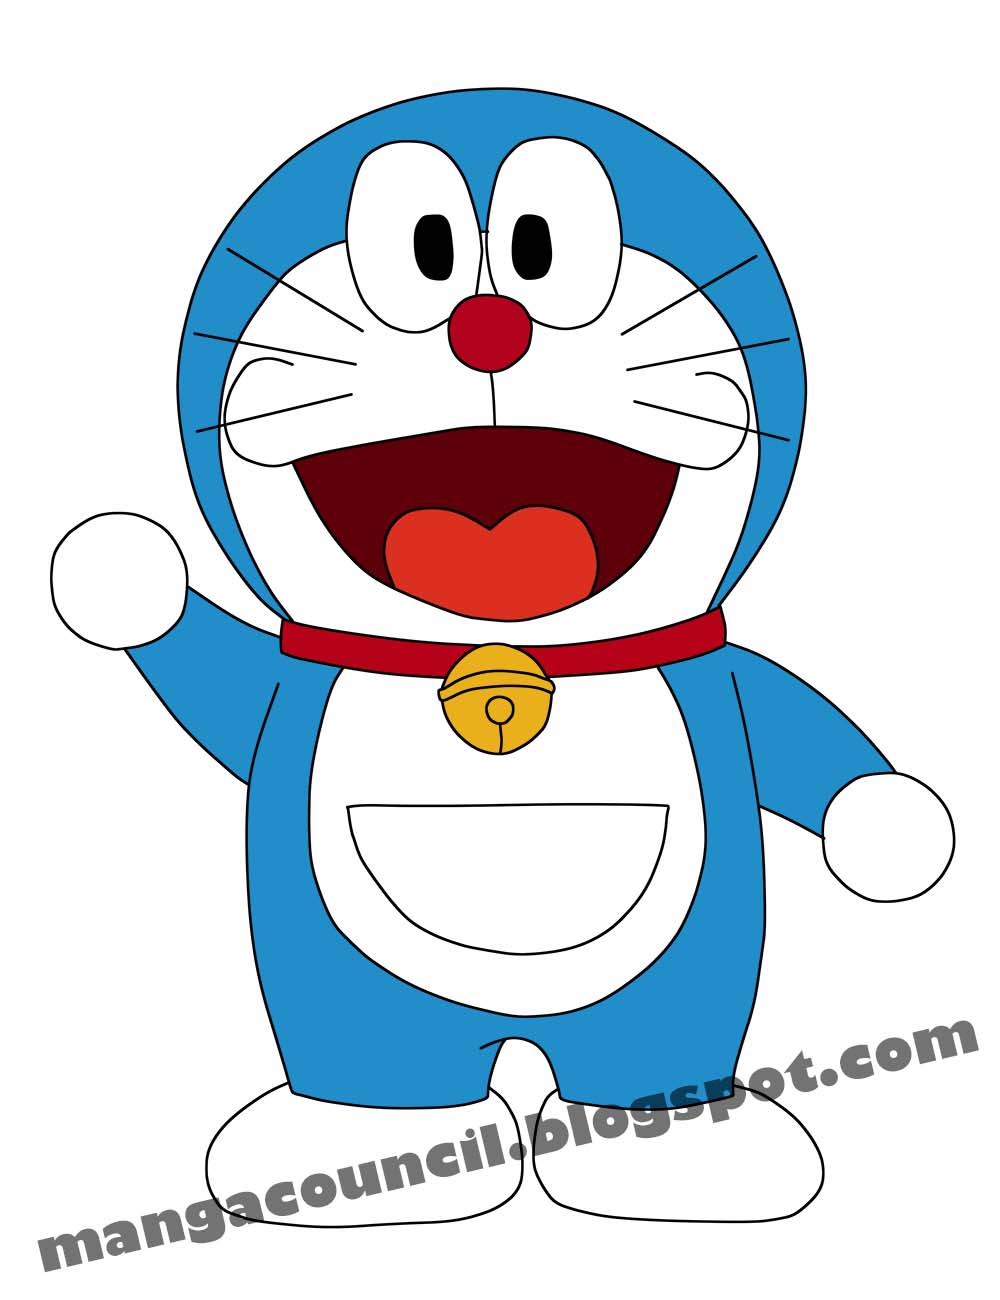 134 Gambar Ilustrasi Doraemon Yang Mudah Digambar Gambarilus